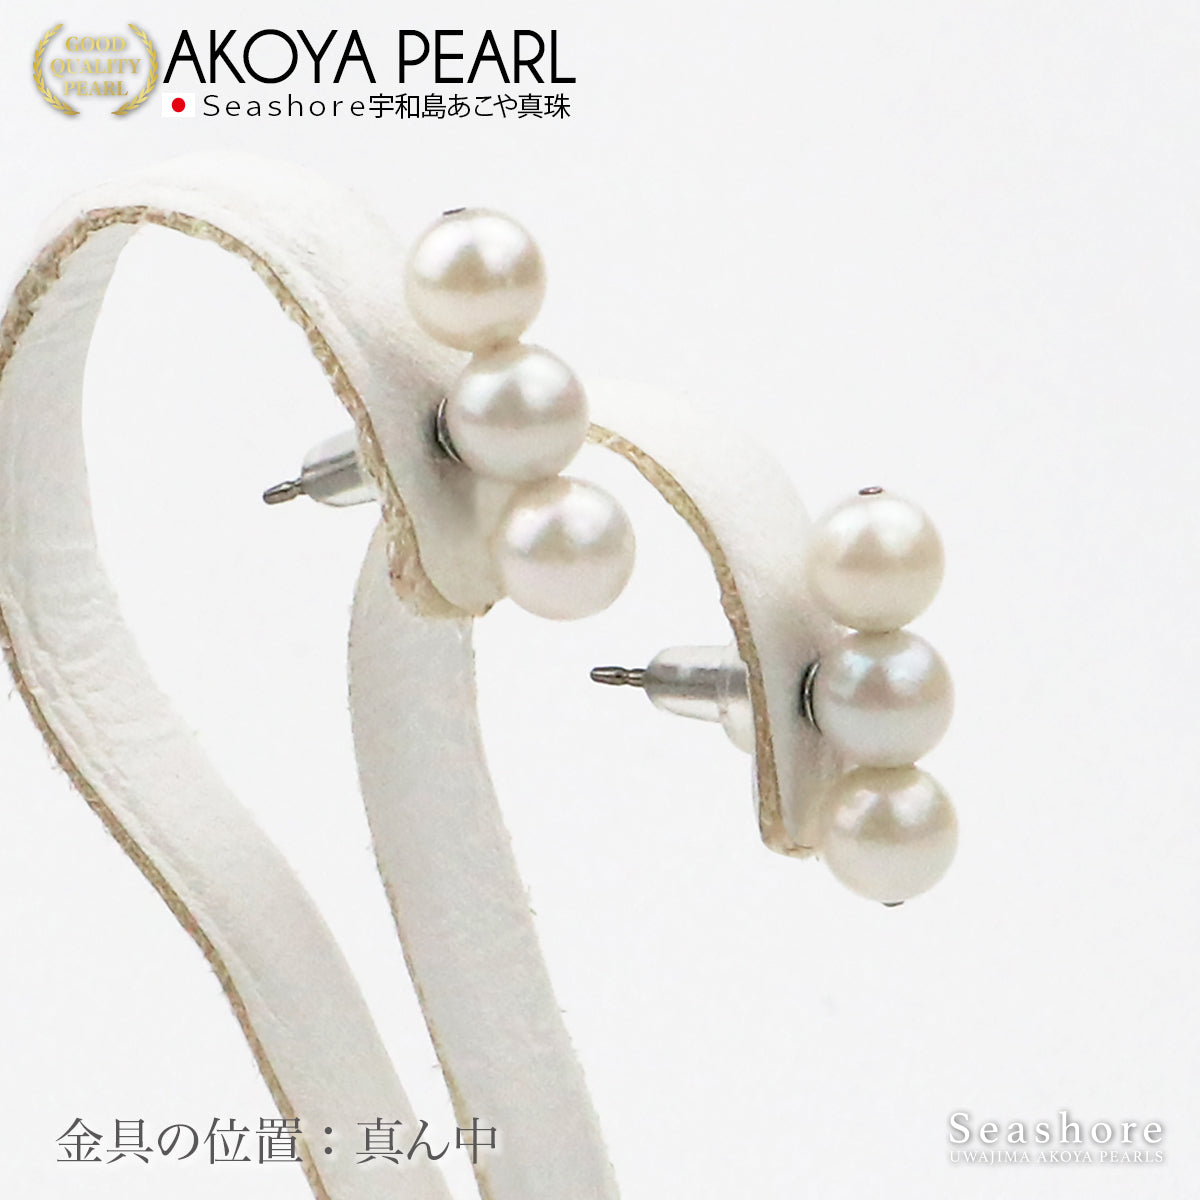 3 pearl line earrings [5.0-5.5mm] Titanium Akoya pearls